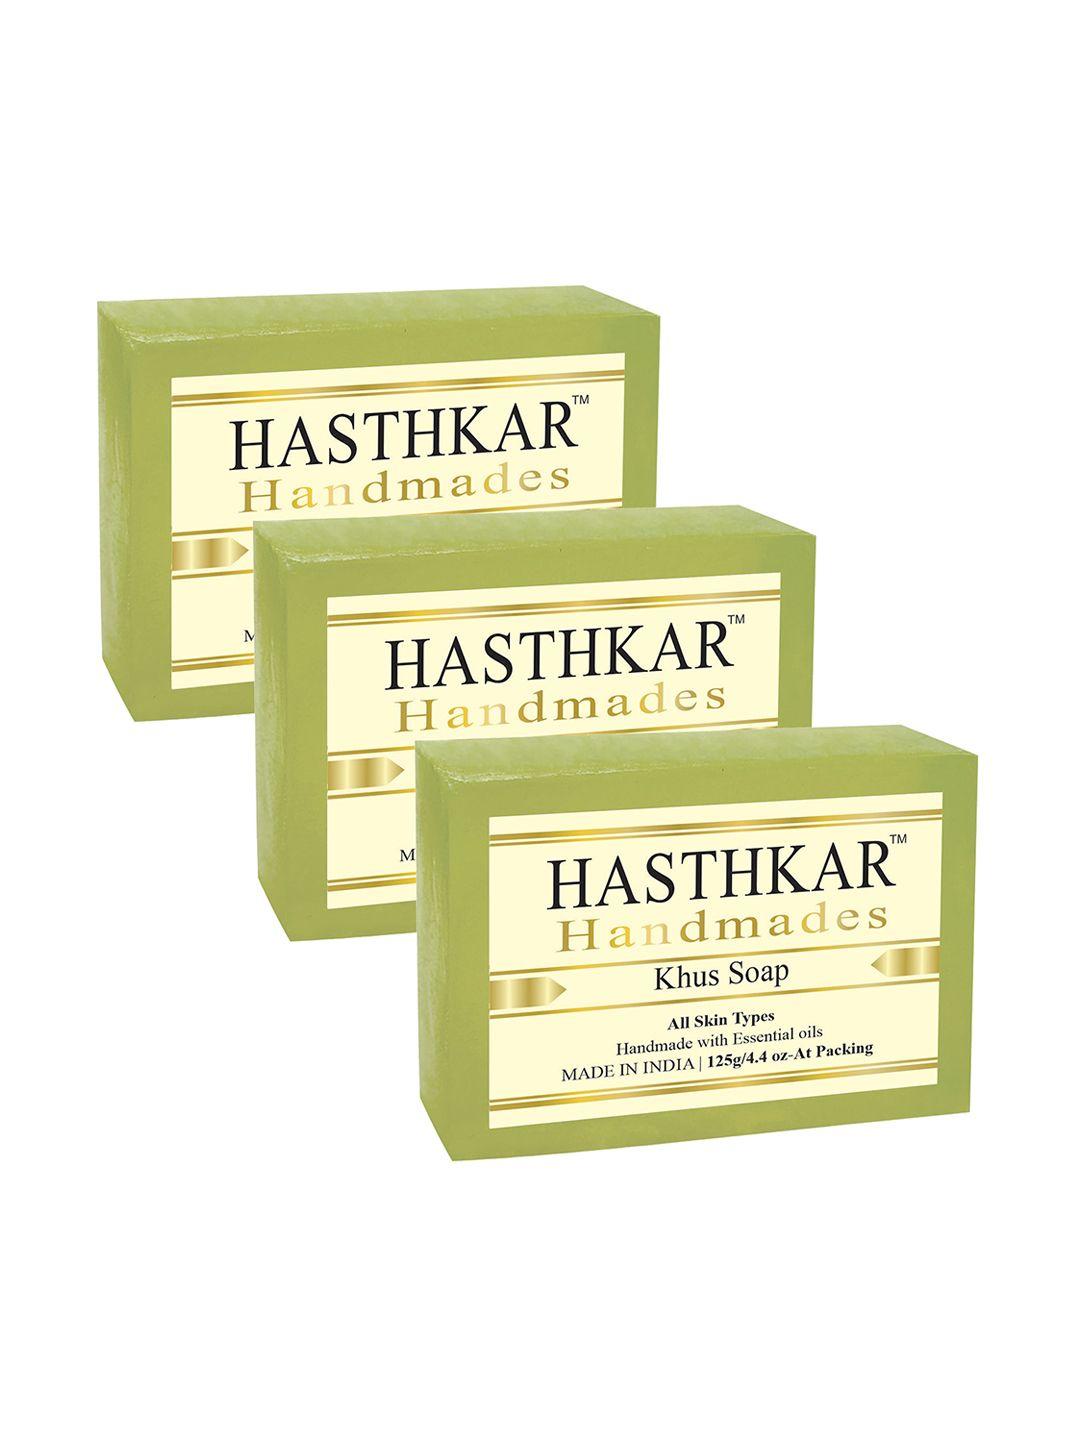 hasthkar set of 3 handmades glycerine khus soap 125gm each